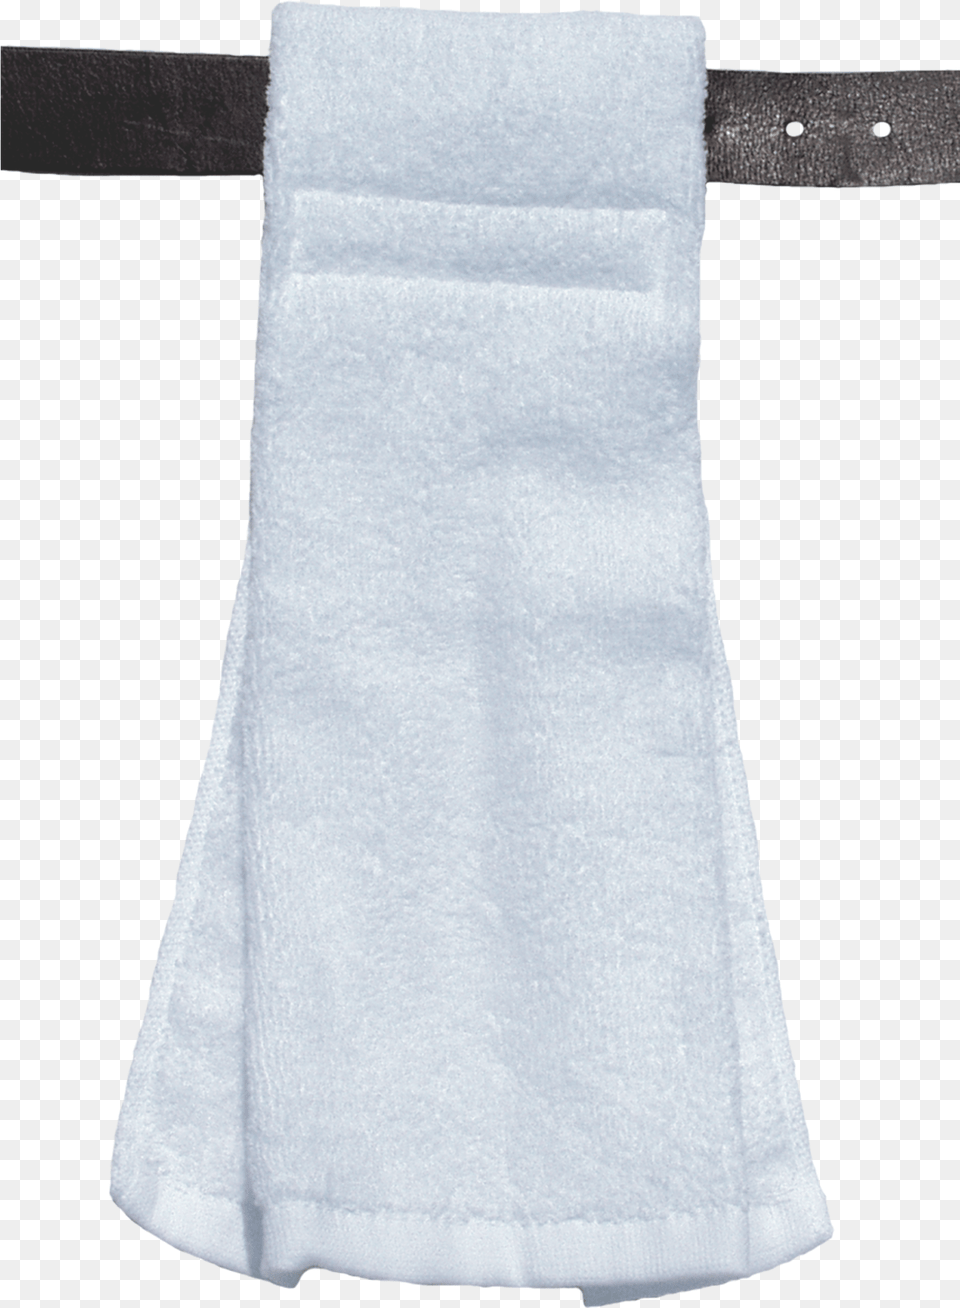 Football Field Towel White Football Towel White Football Towel, Bath Towel, Clothing, Coat Png